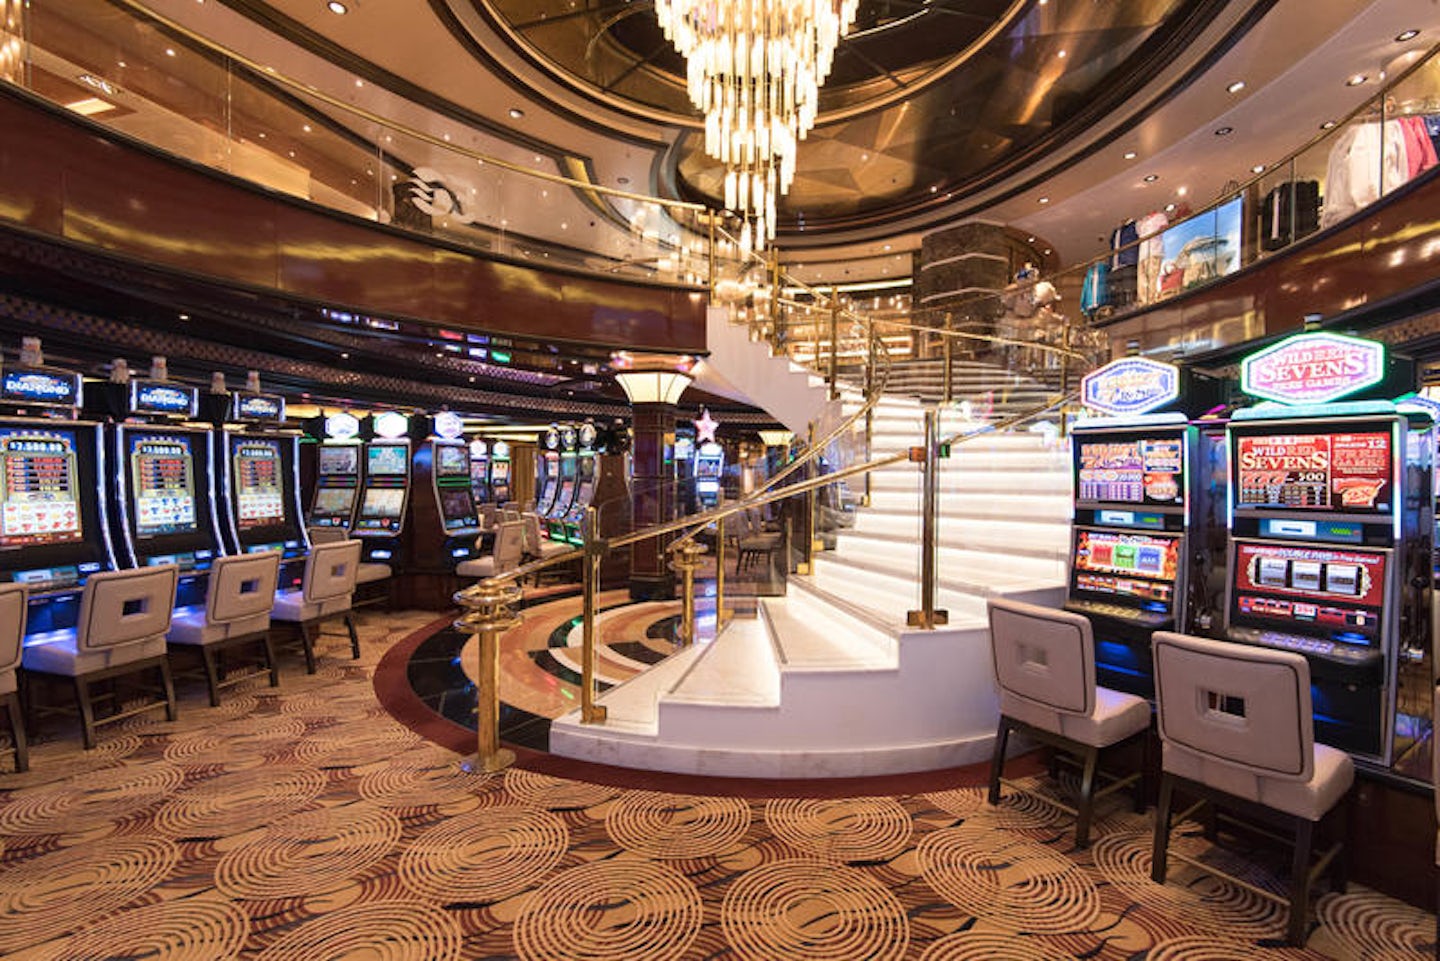 princess cruise casino cash out